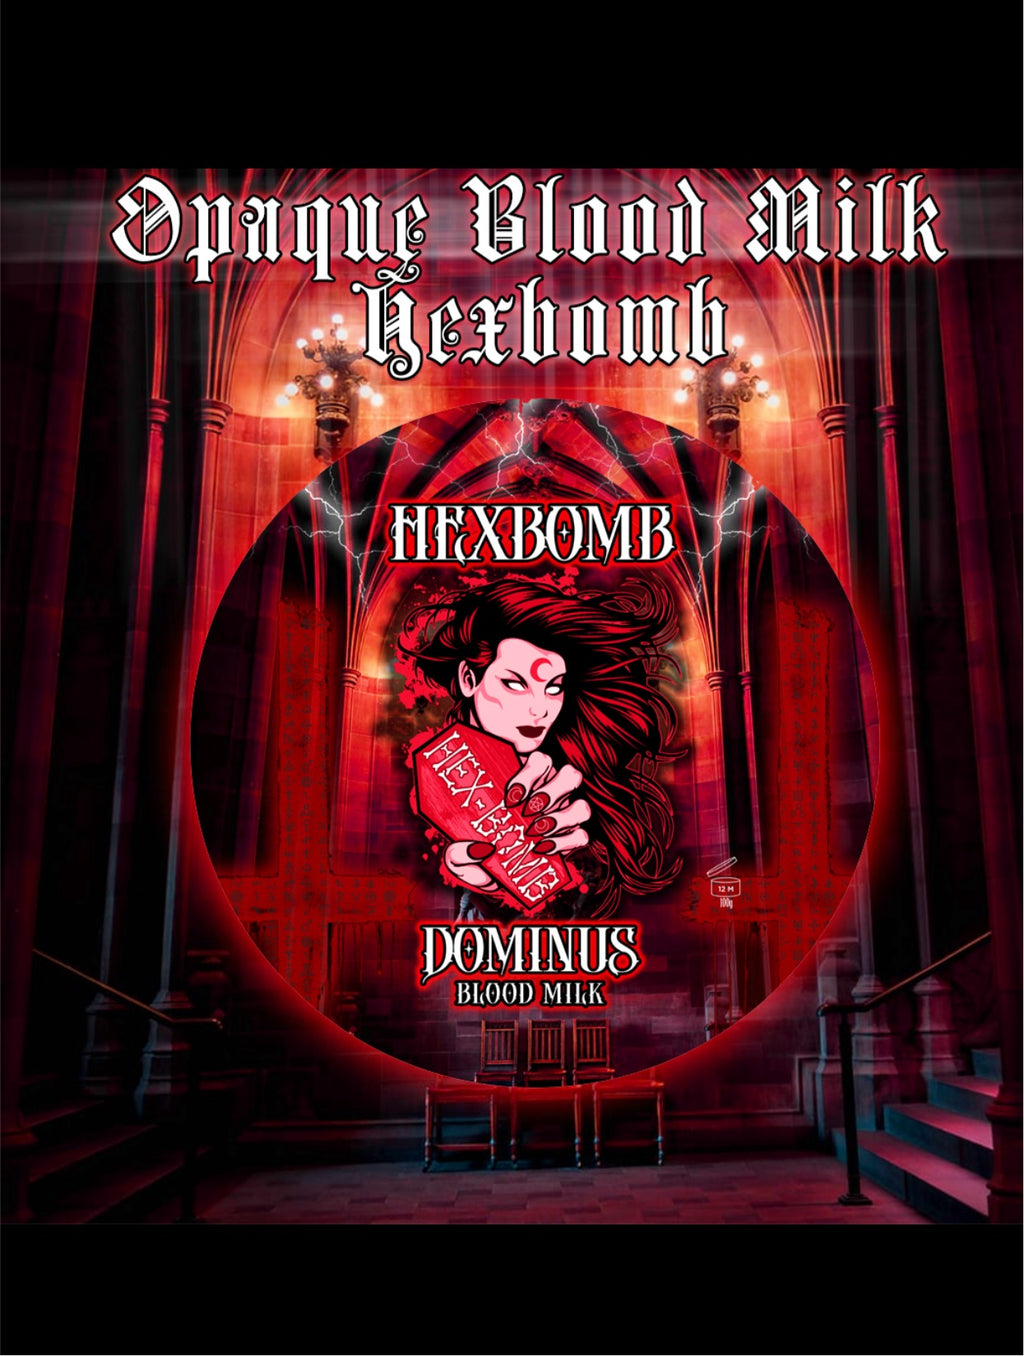 DOMINUS- Blood milk Hexbomb